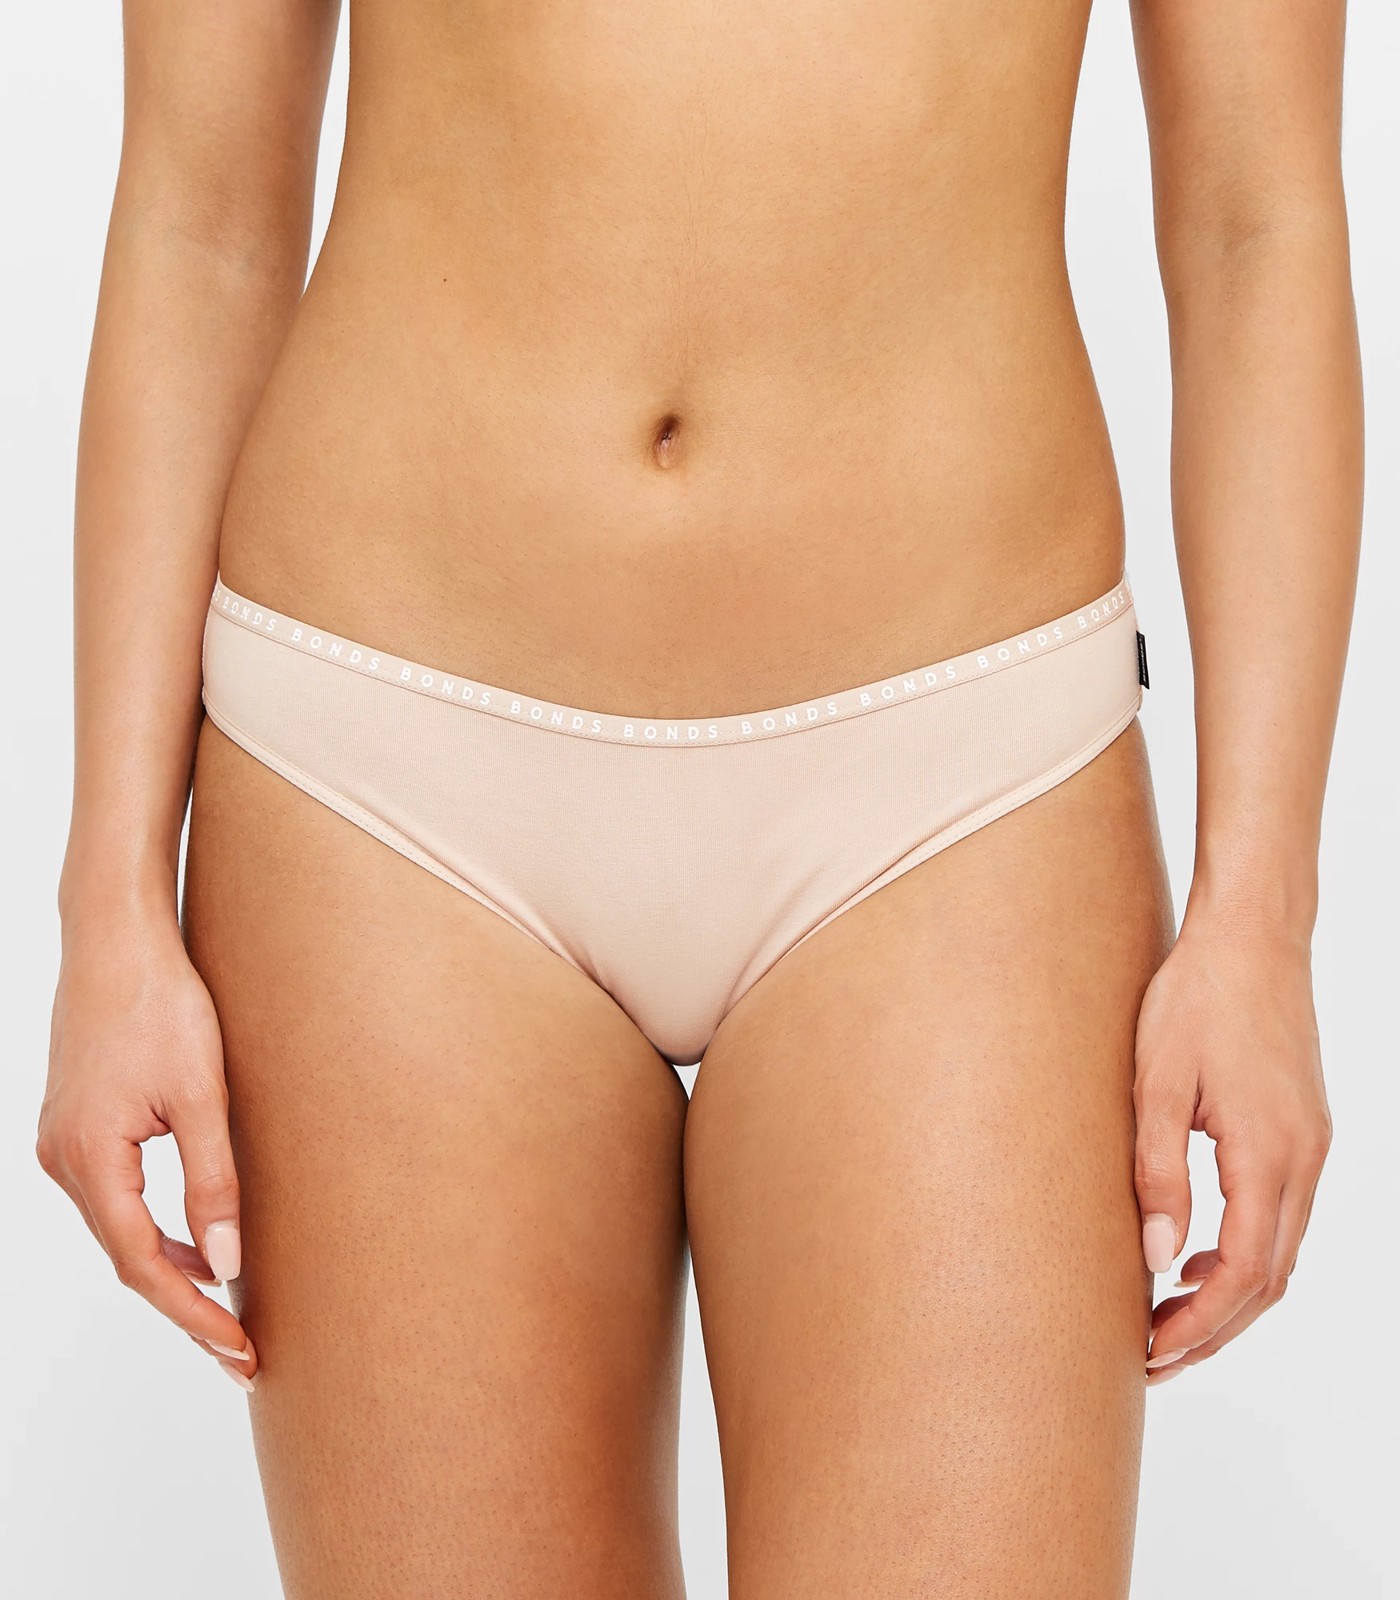 Bonds Womens Underwear Bikini Hipster Size 10 2 Pack